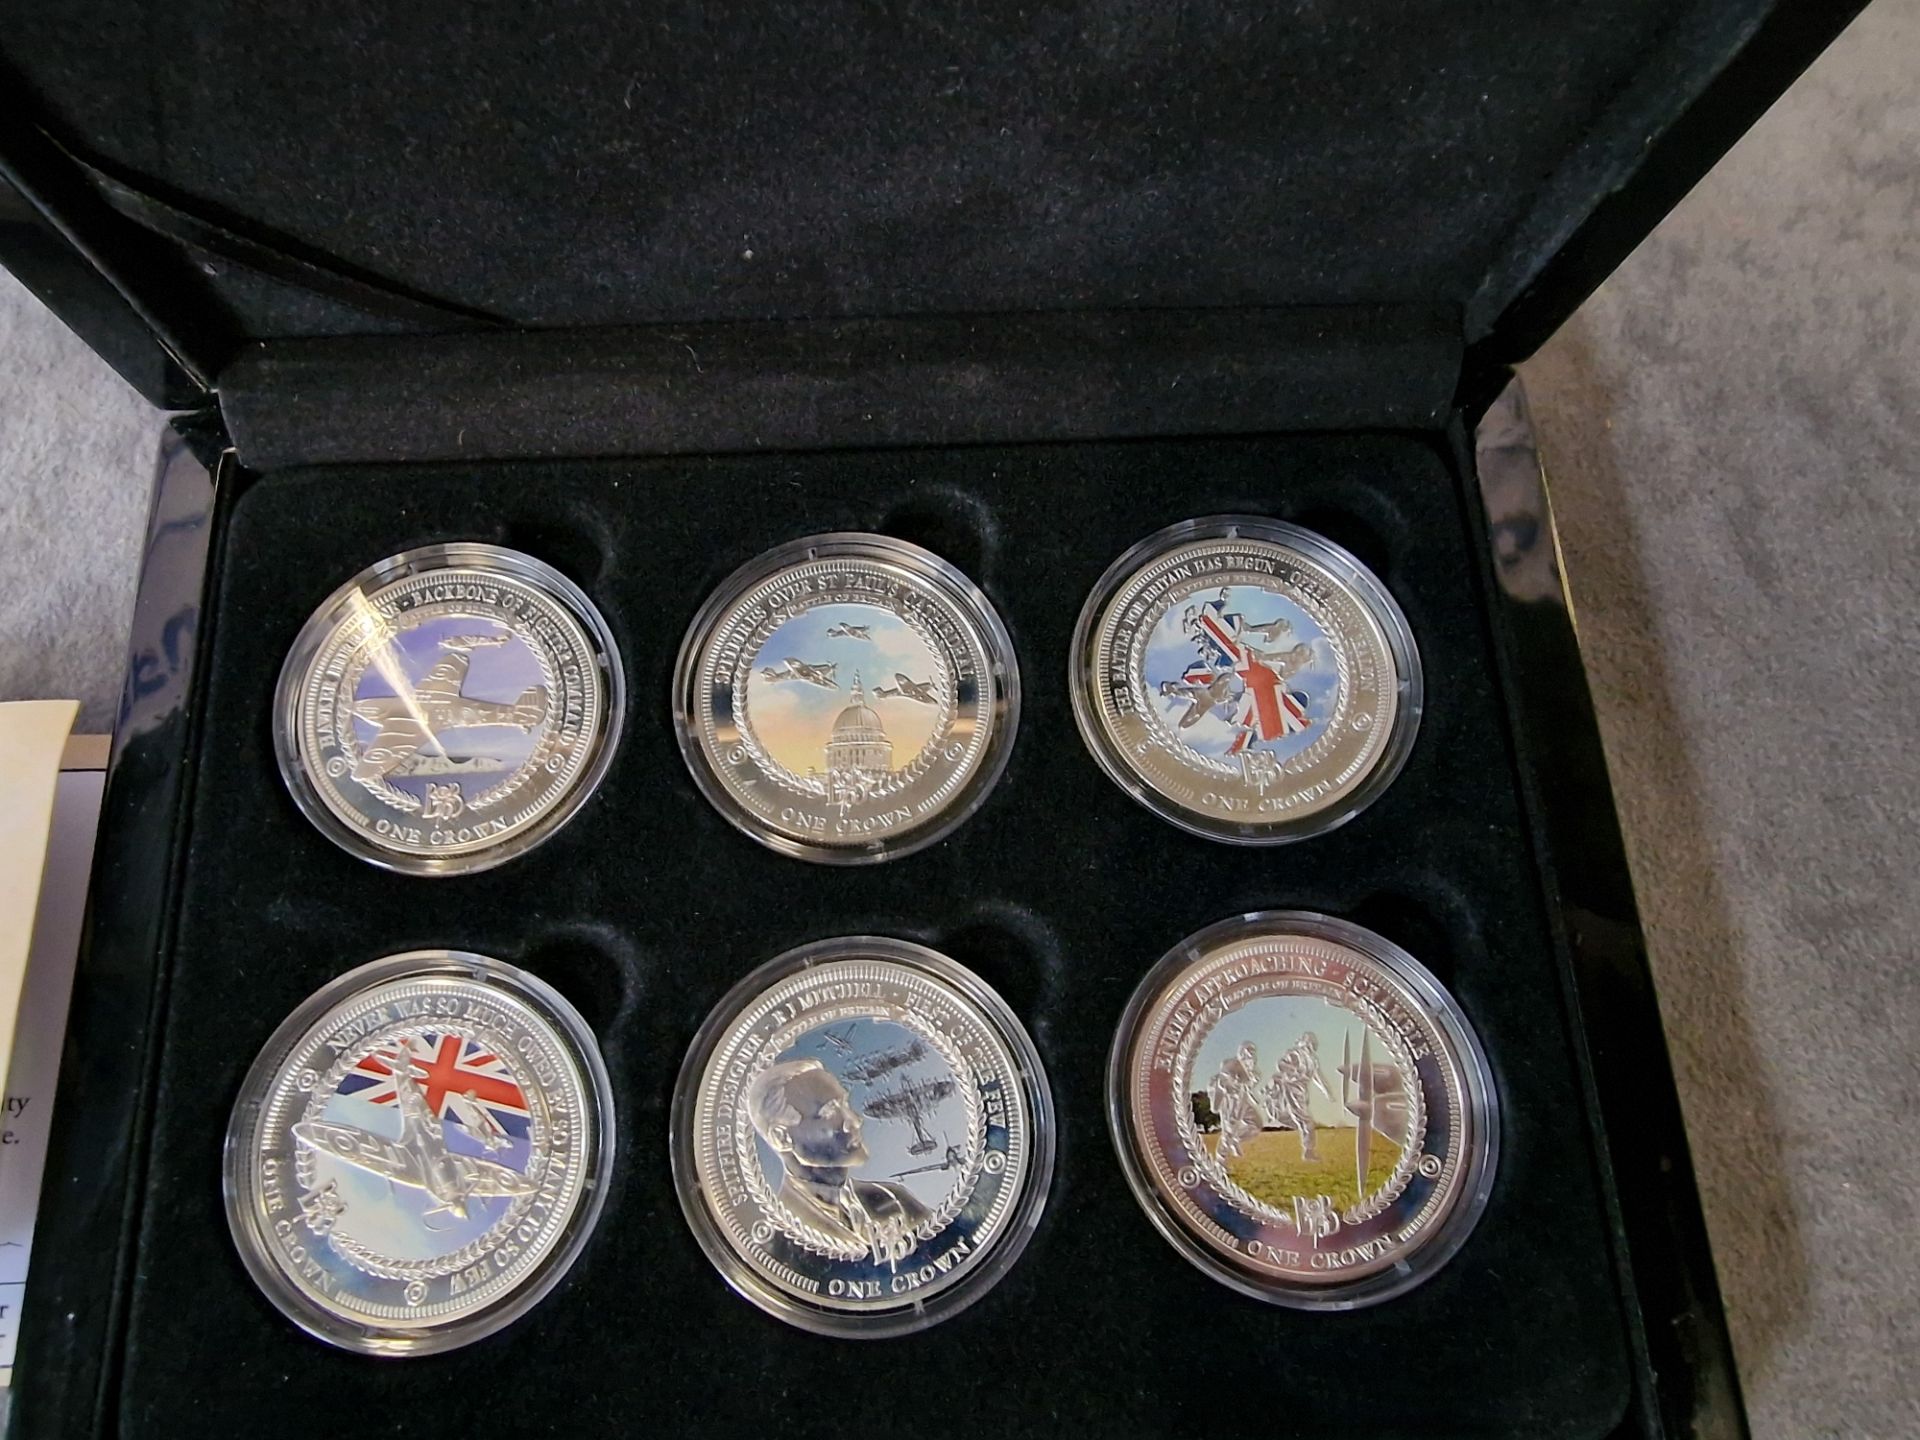 The Bradford exchange Battle of Britain 75th Anniversary silver crown coin set with certificate of - Bild 3 aus 6